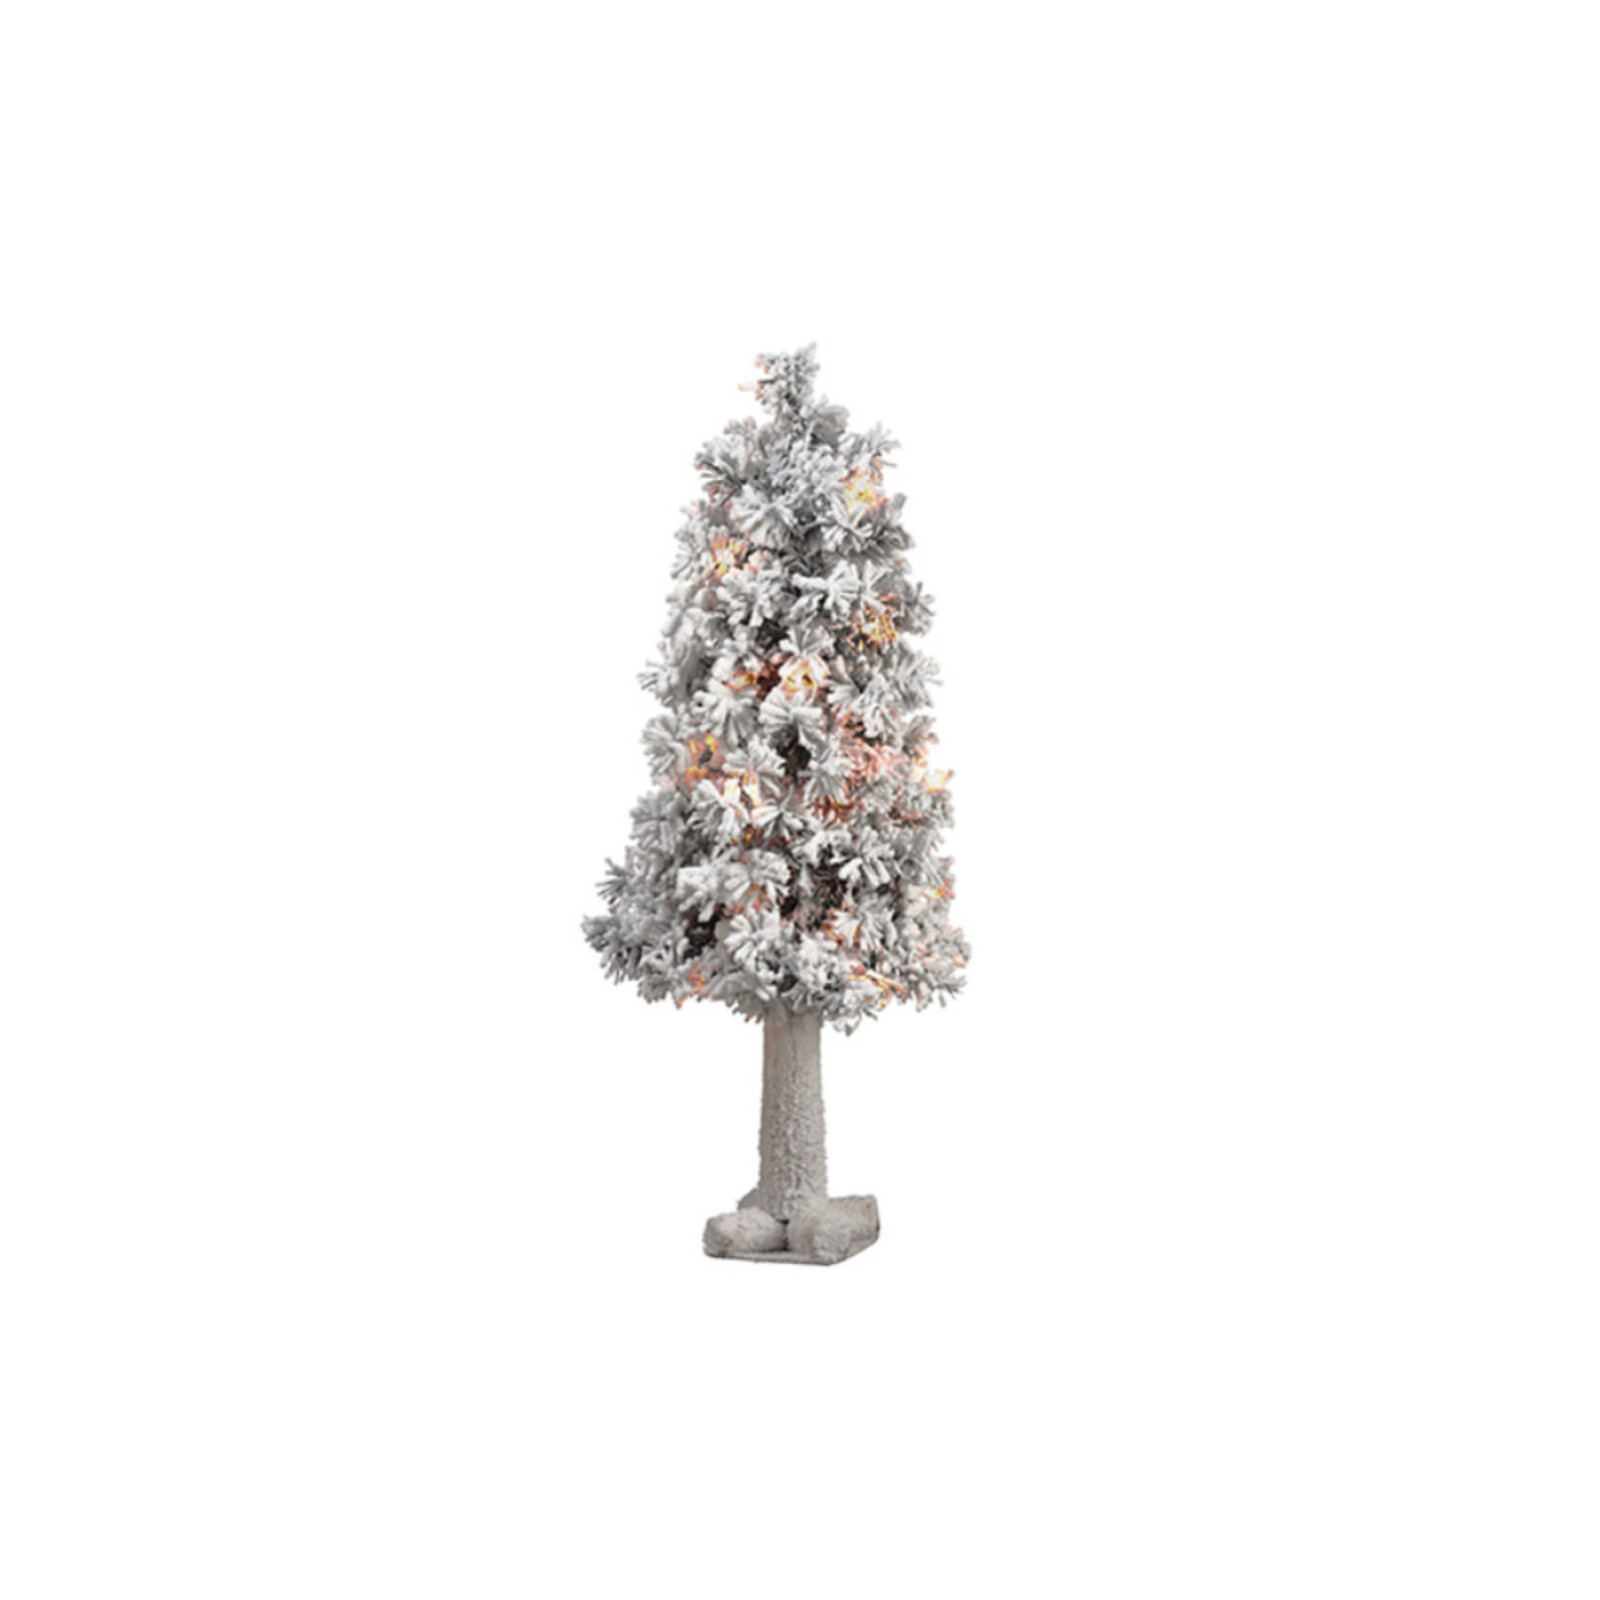 Allstate Floral & Craft INC. 3' Snow Alpine Christmas Tree loading=